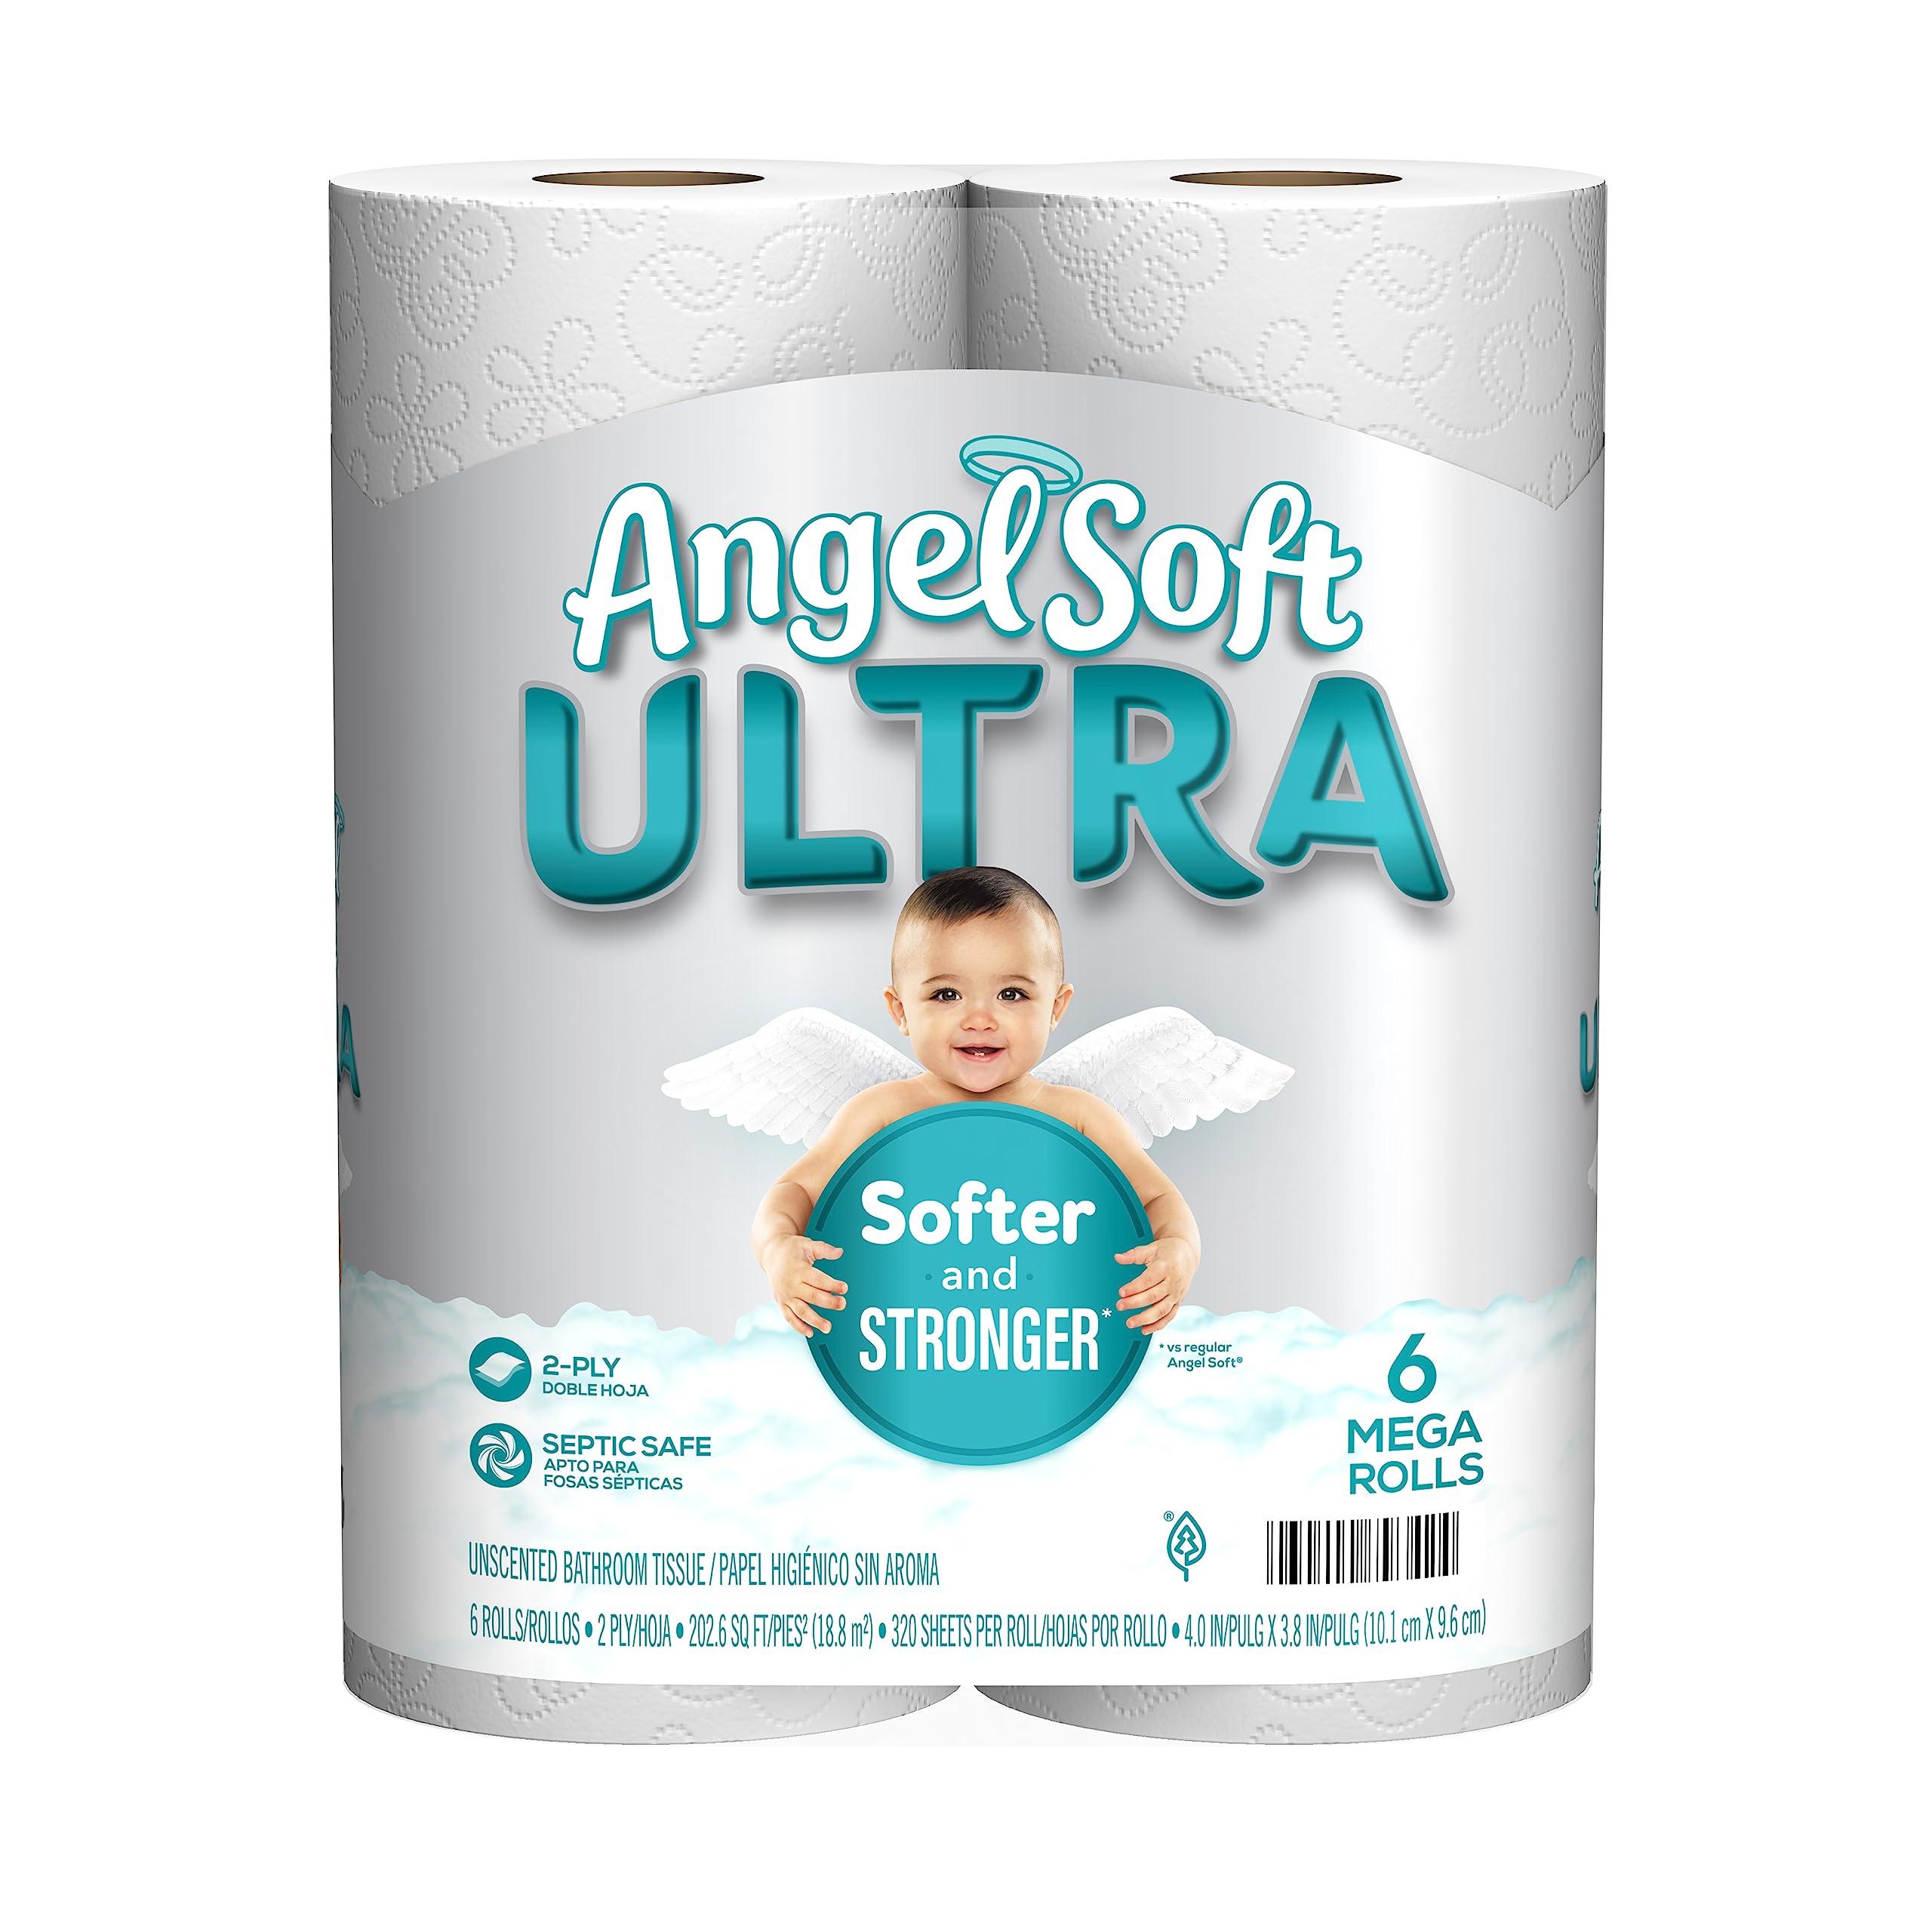 $5.42 /w S&S: Angel Soft® Ultra Toilet Paper, 6 Mega Rolls, 2-Ply Bath Tissue